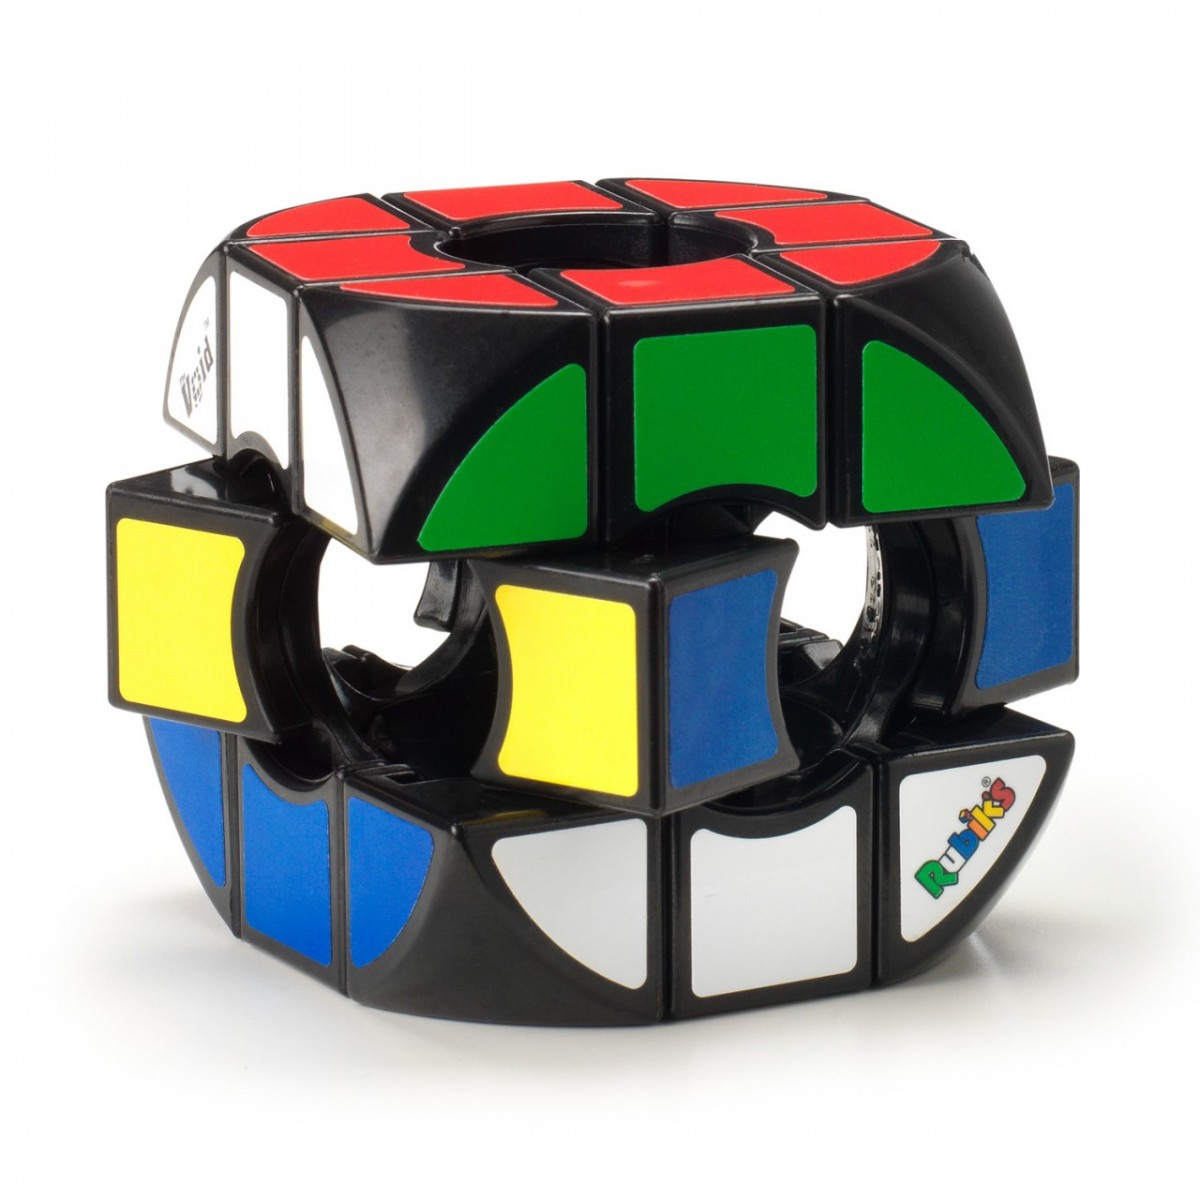 Кубик Рубика 3х3 Пустой (VOID 2018)